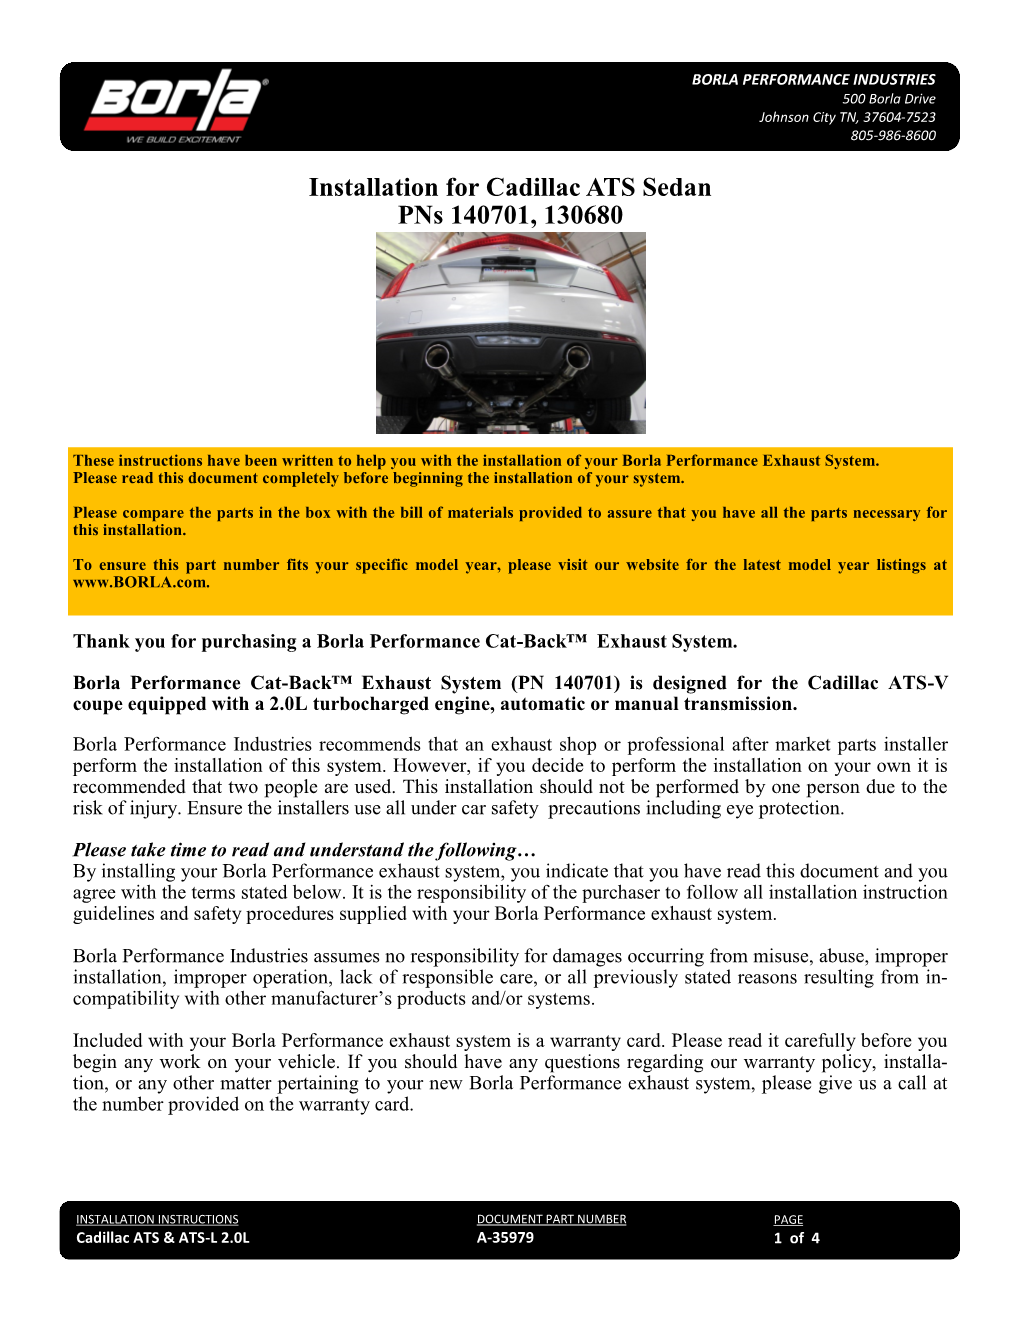 Installation for Cadillac ATS Sedan Pns 140701, 130680